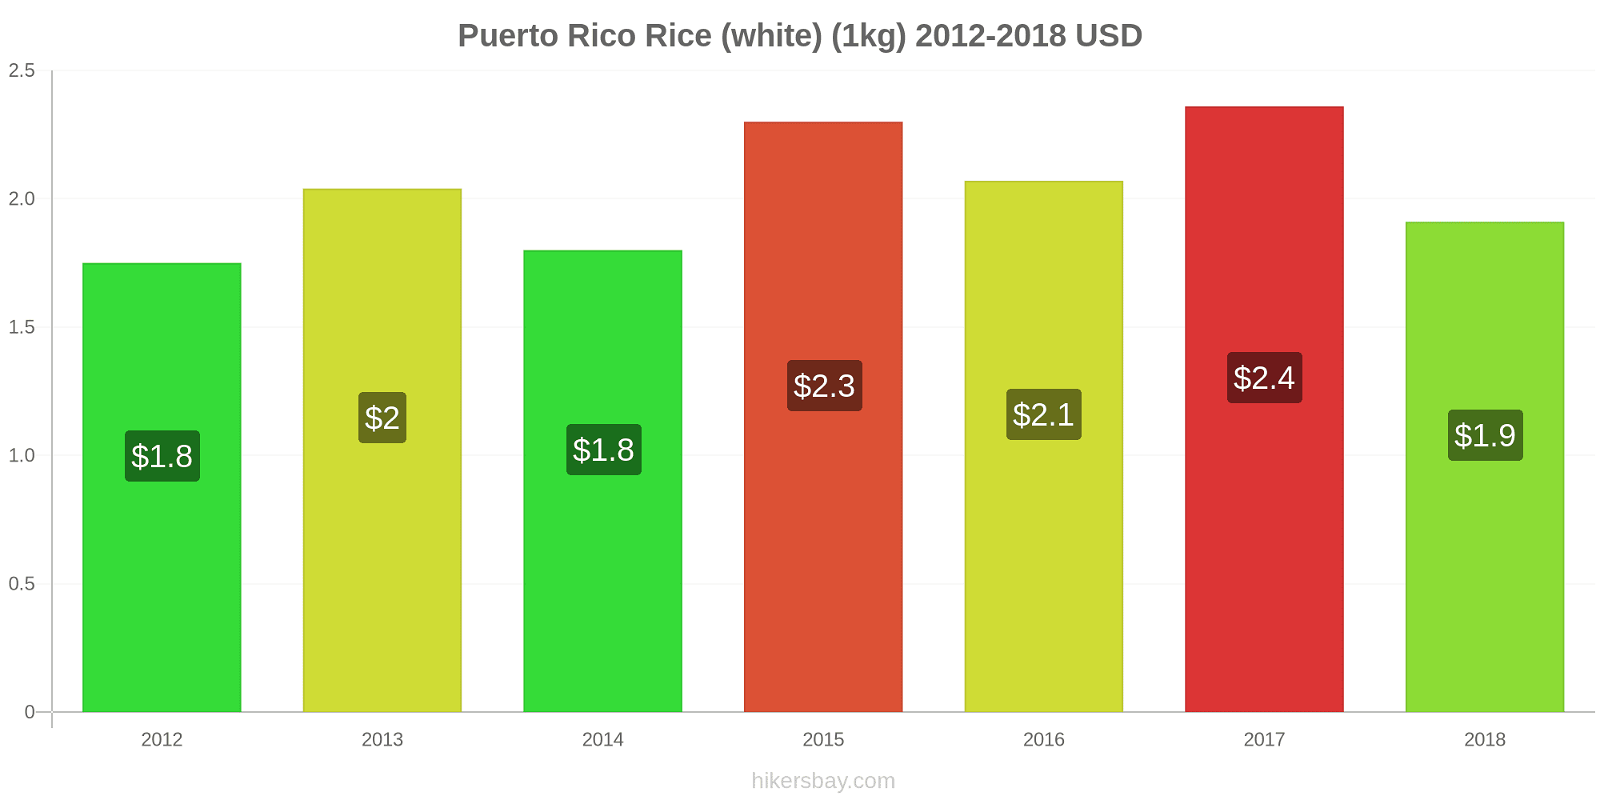 Puerto Rico price changes Kilo of white rice hikersbay.com